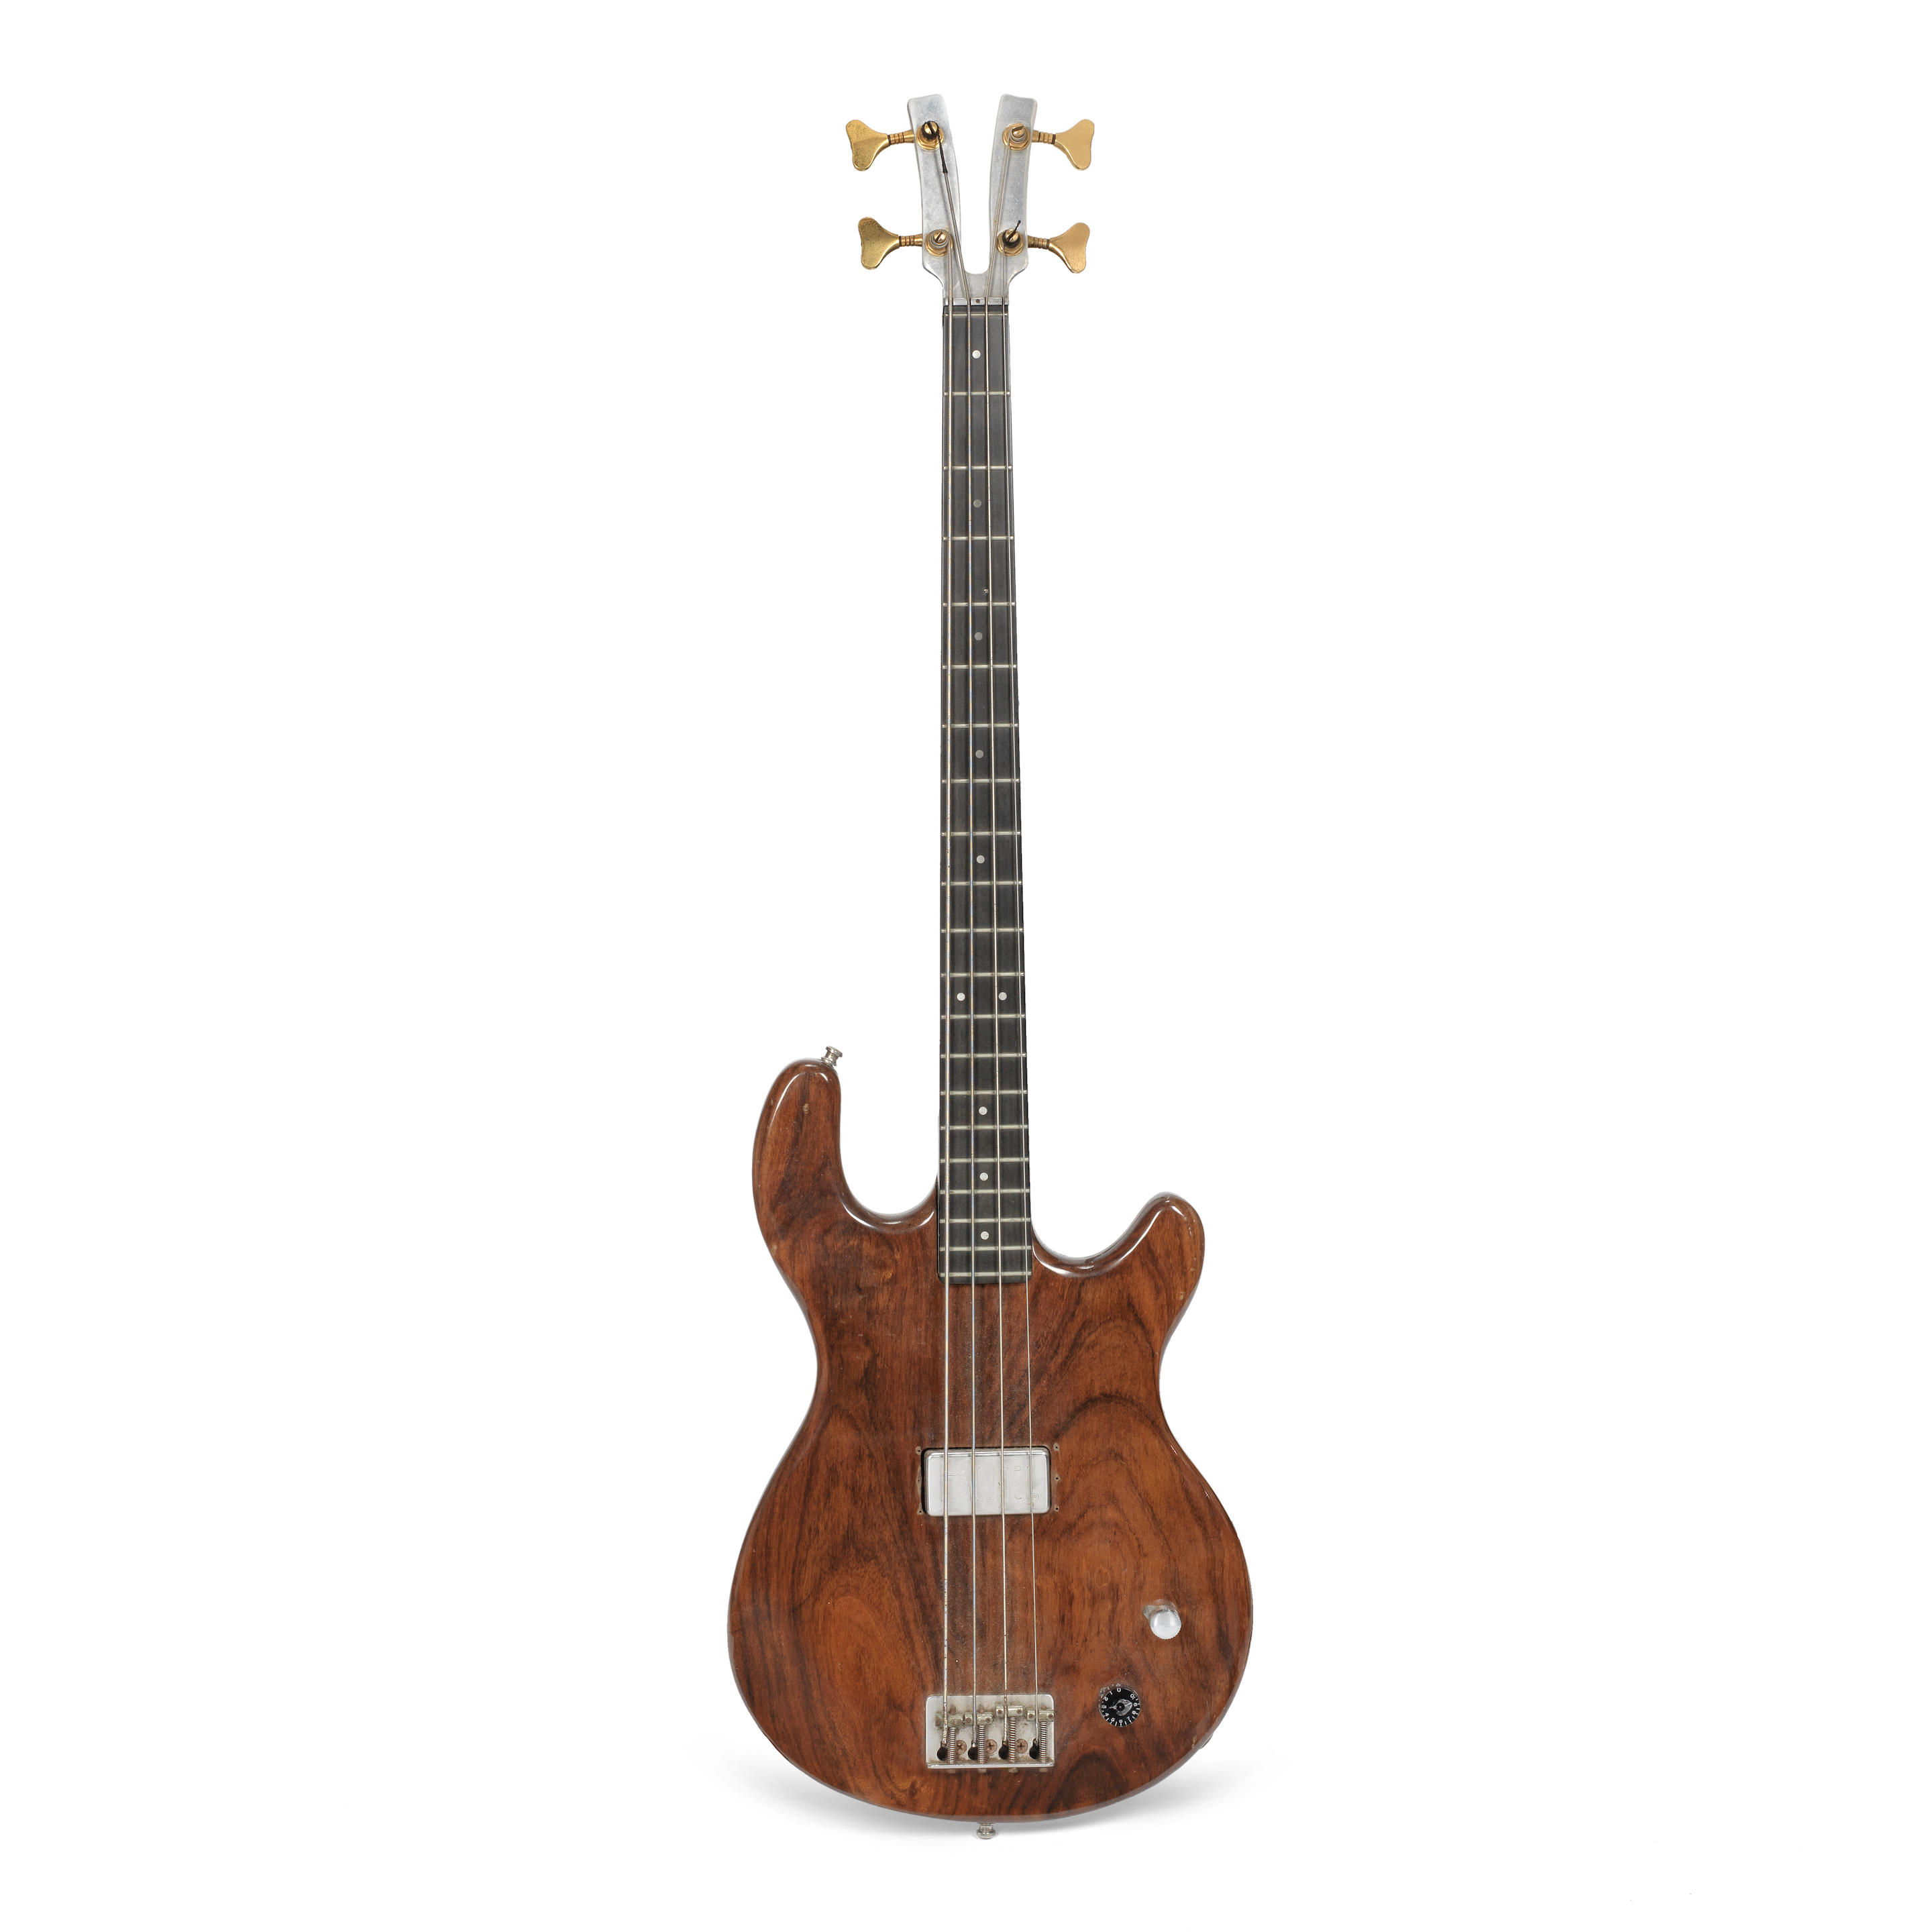 Alan Lancaster Status Quo Tribute Miniature Bass Guitar UK SELLER 